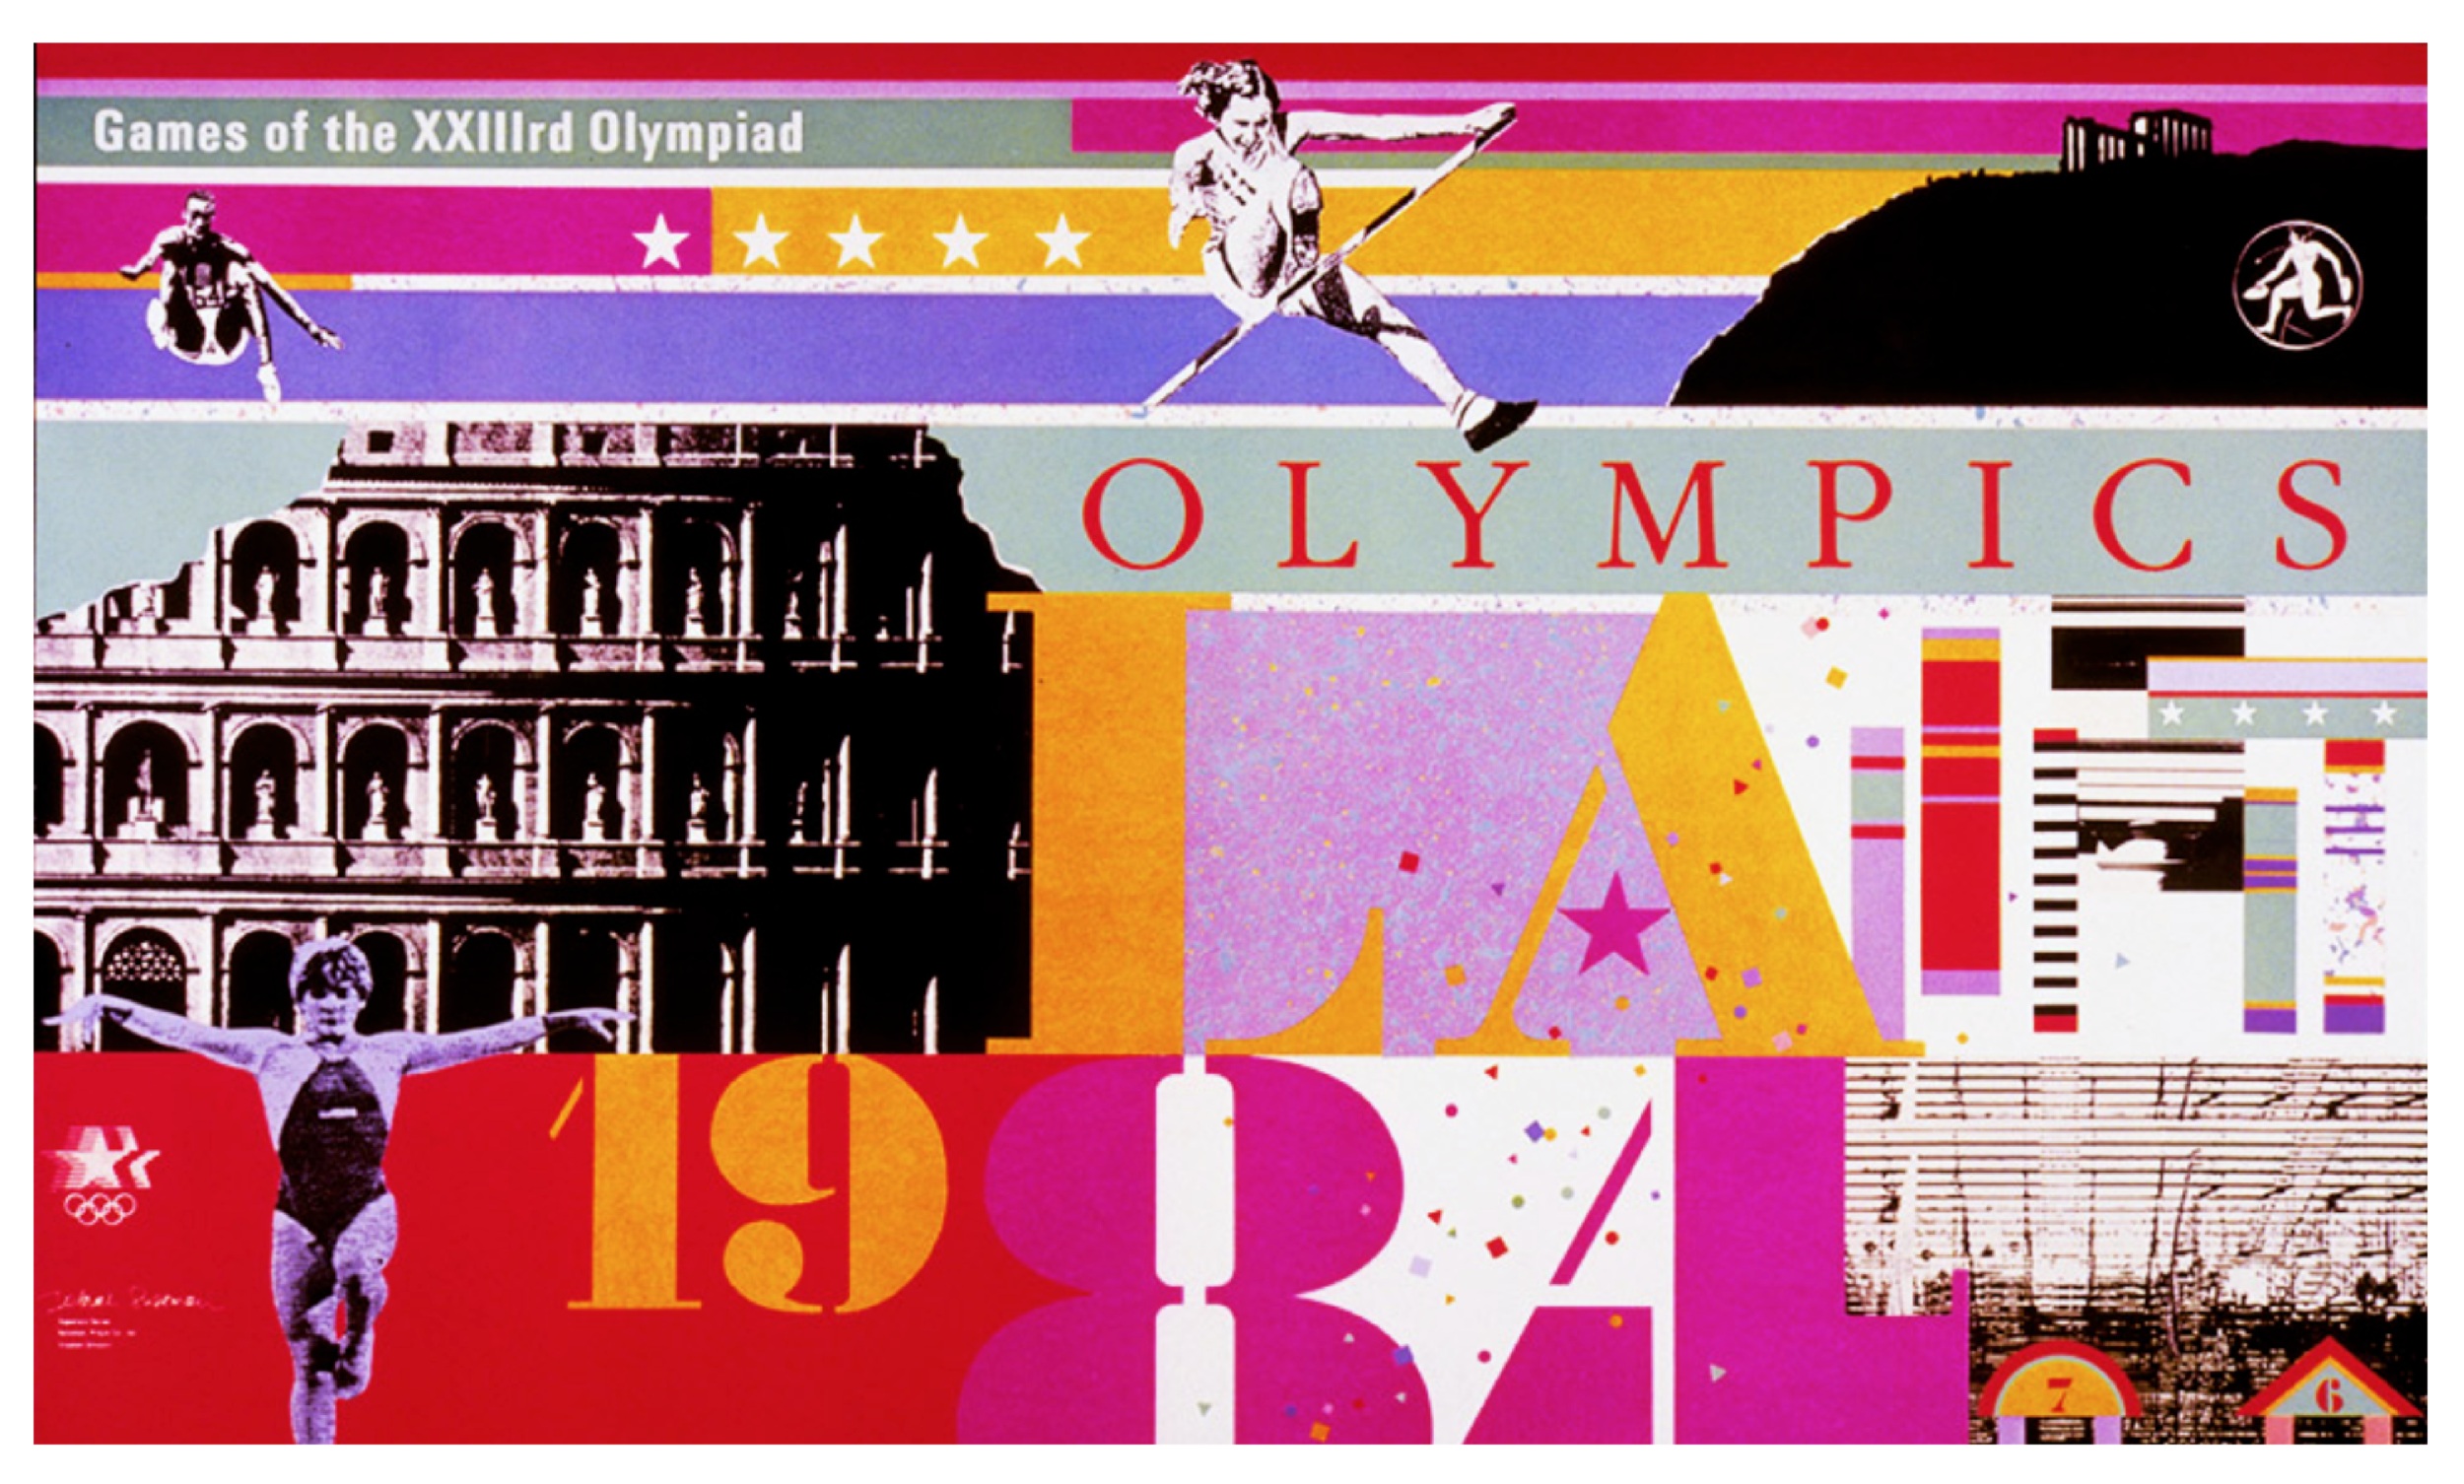 1984 olympics imagery